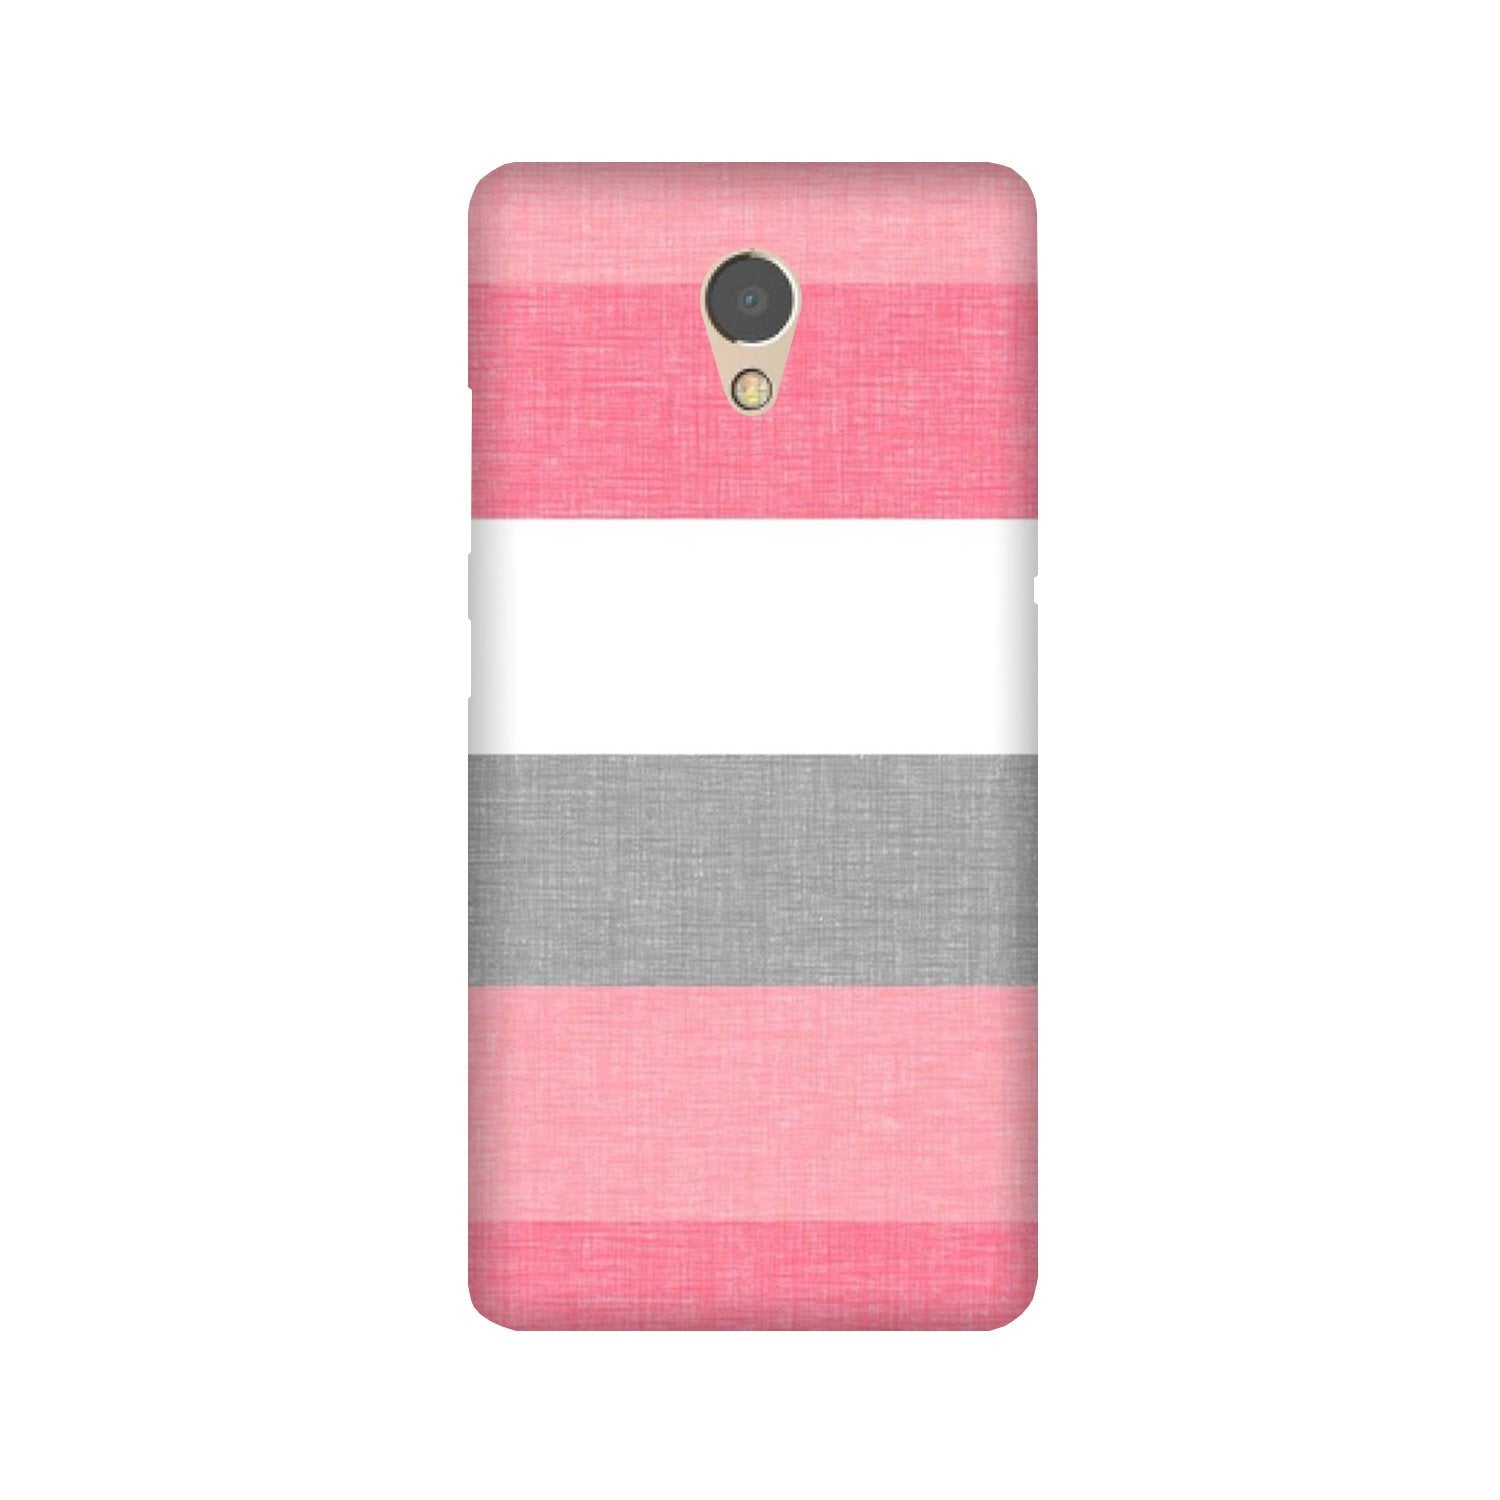 Pink white pattern Case for Lenovo P2